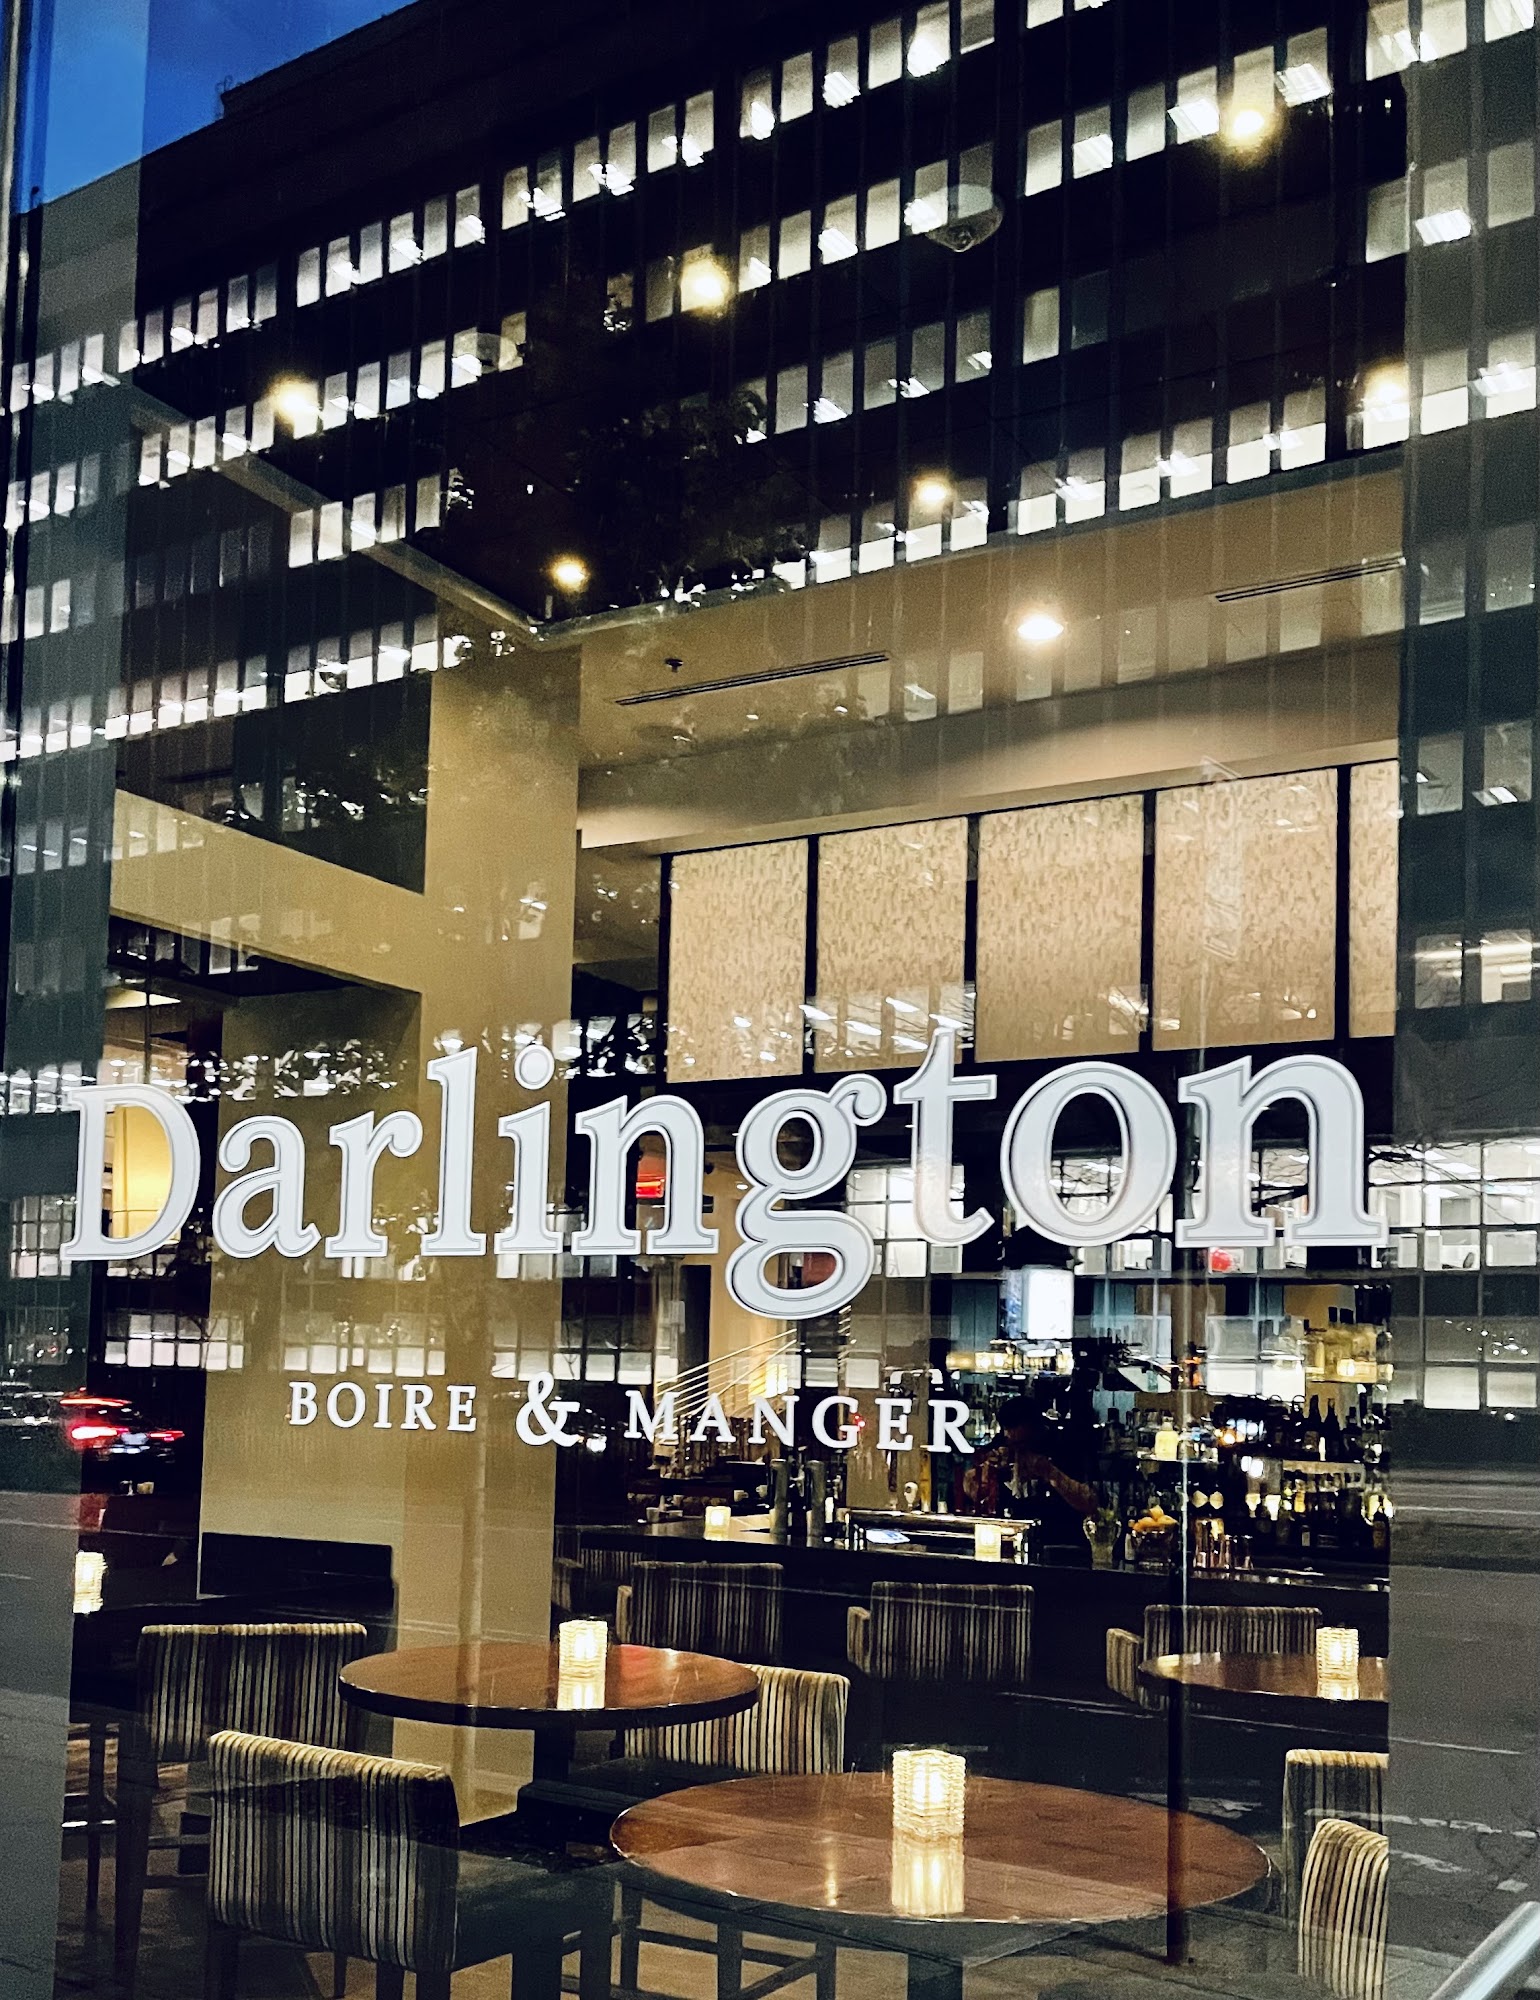 Darlington Boire & Manger